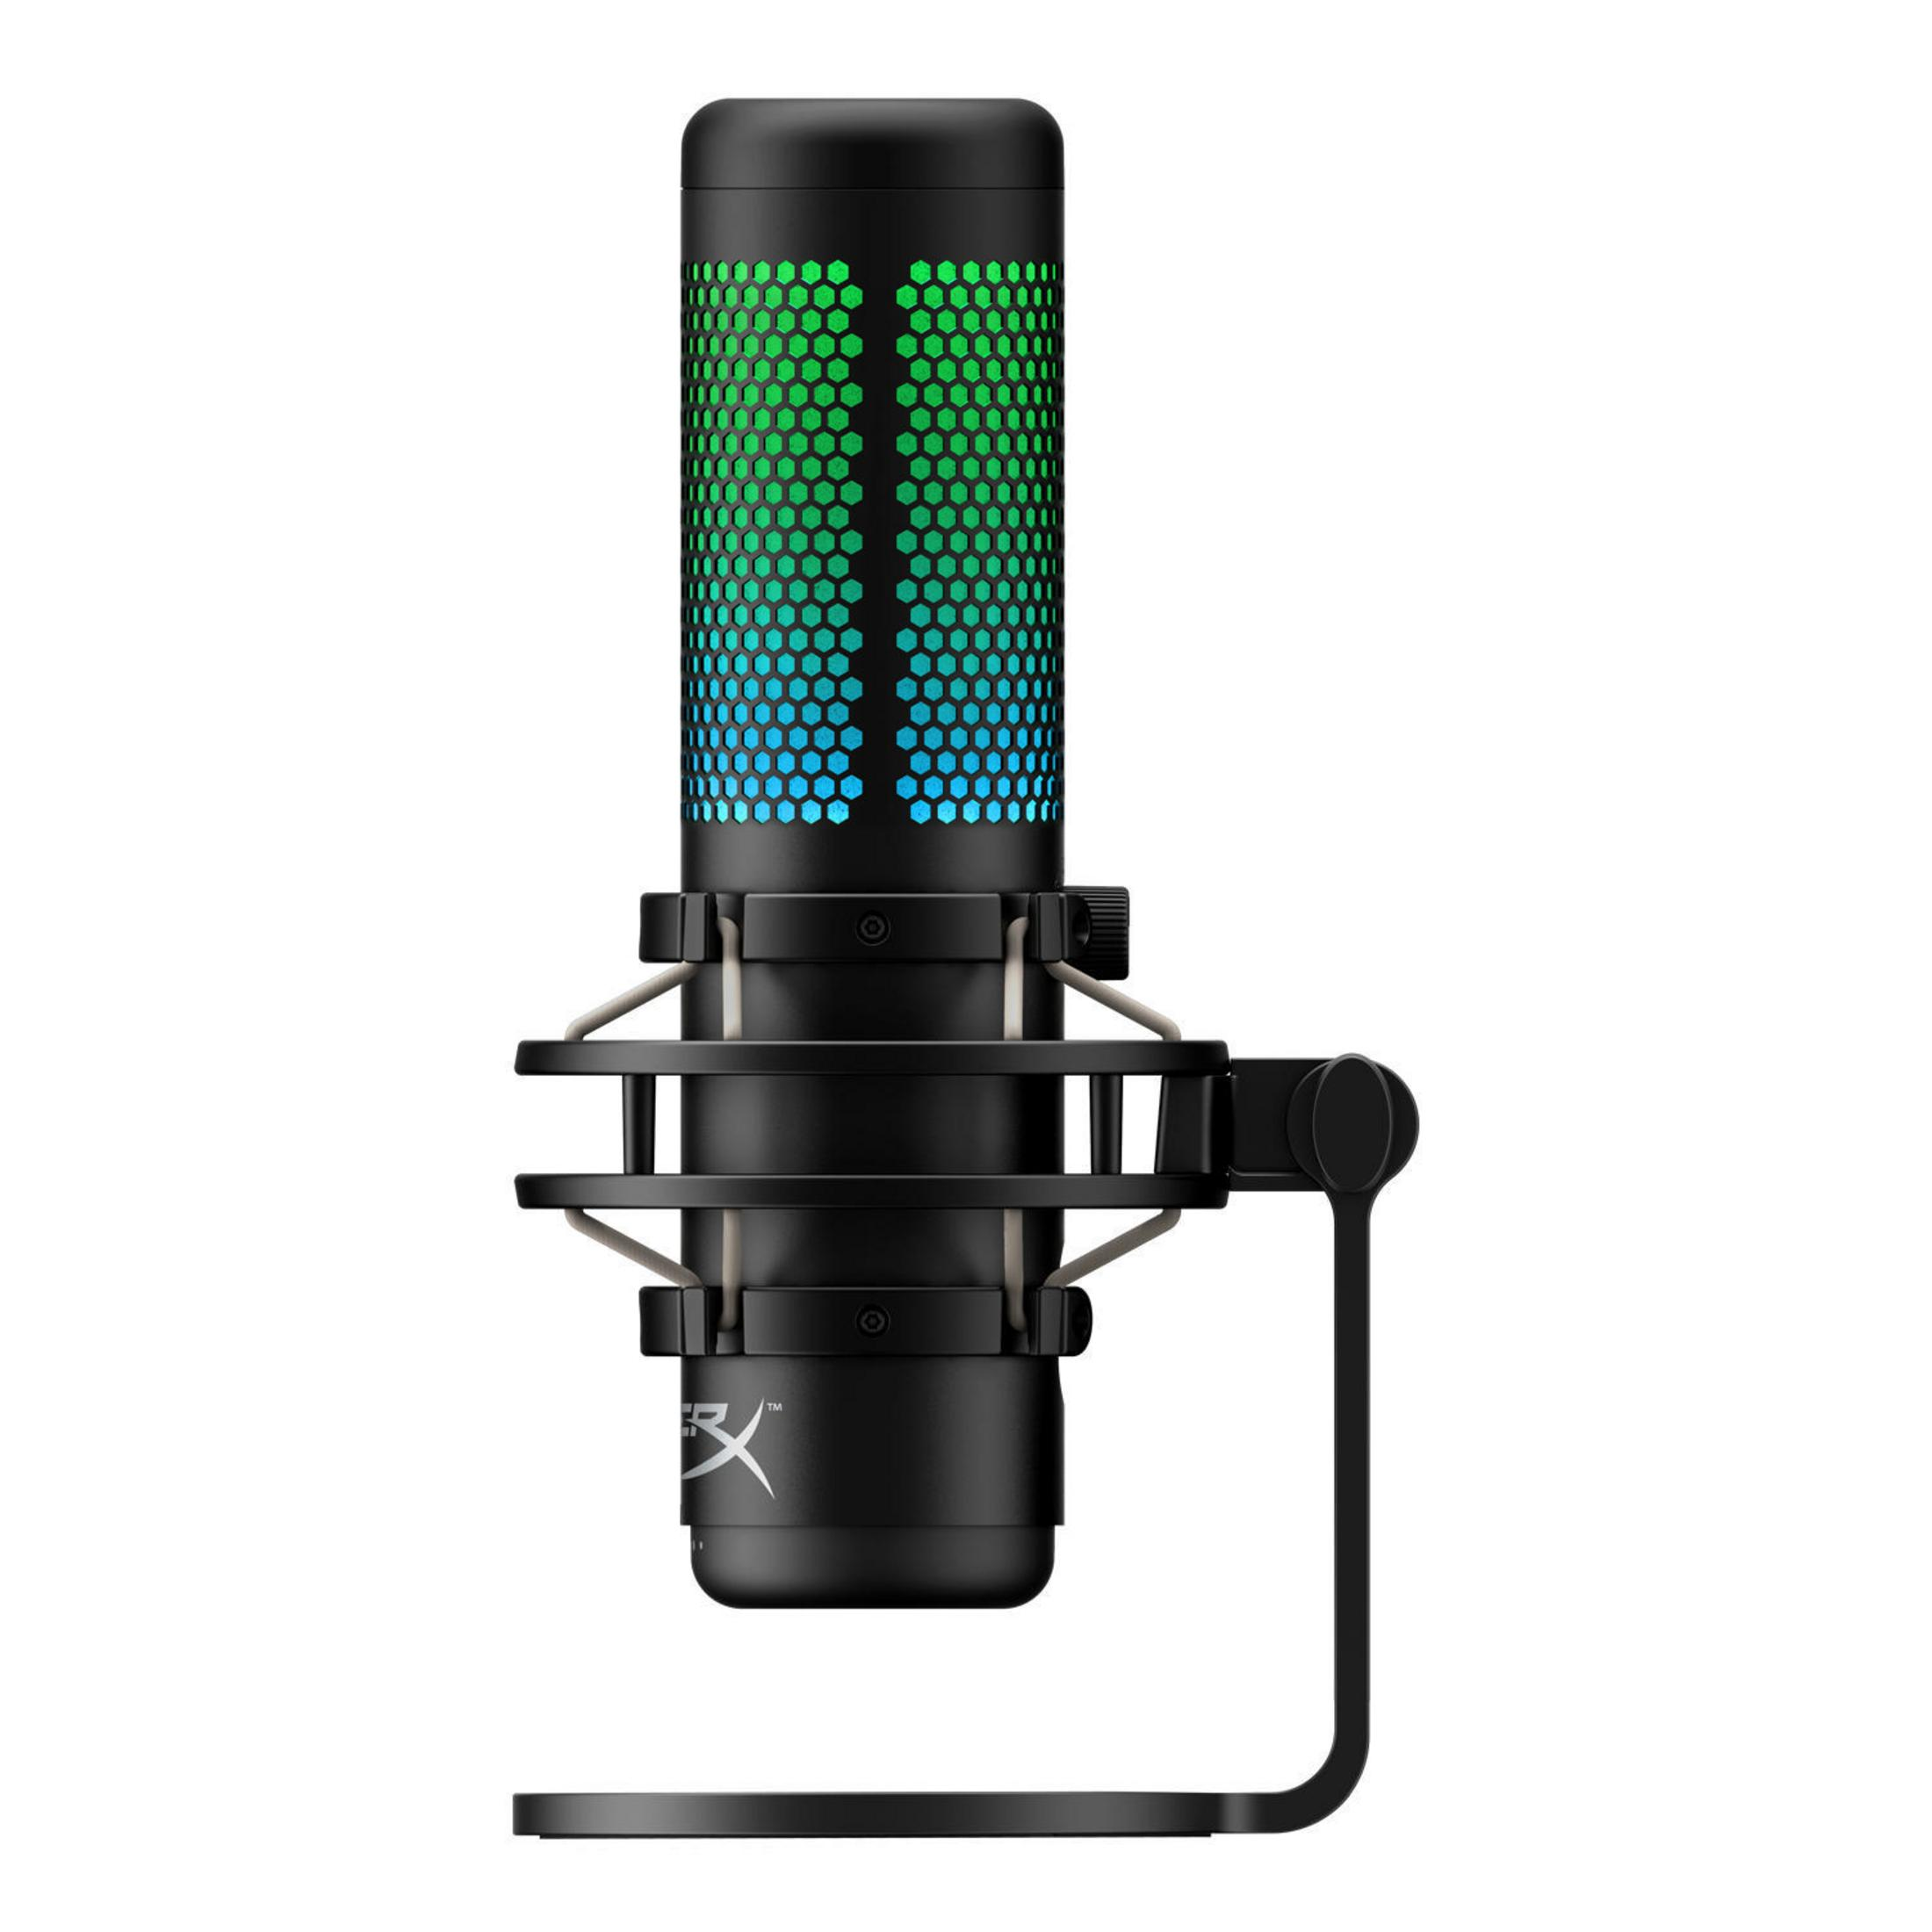 RGB Mikrofon, Schwarz S HYPERX HMIQ1S-XX-RG/G QUADCAST USB